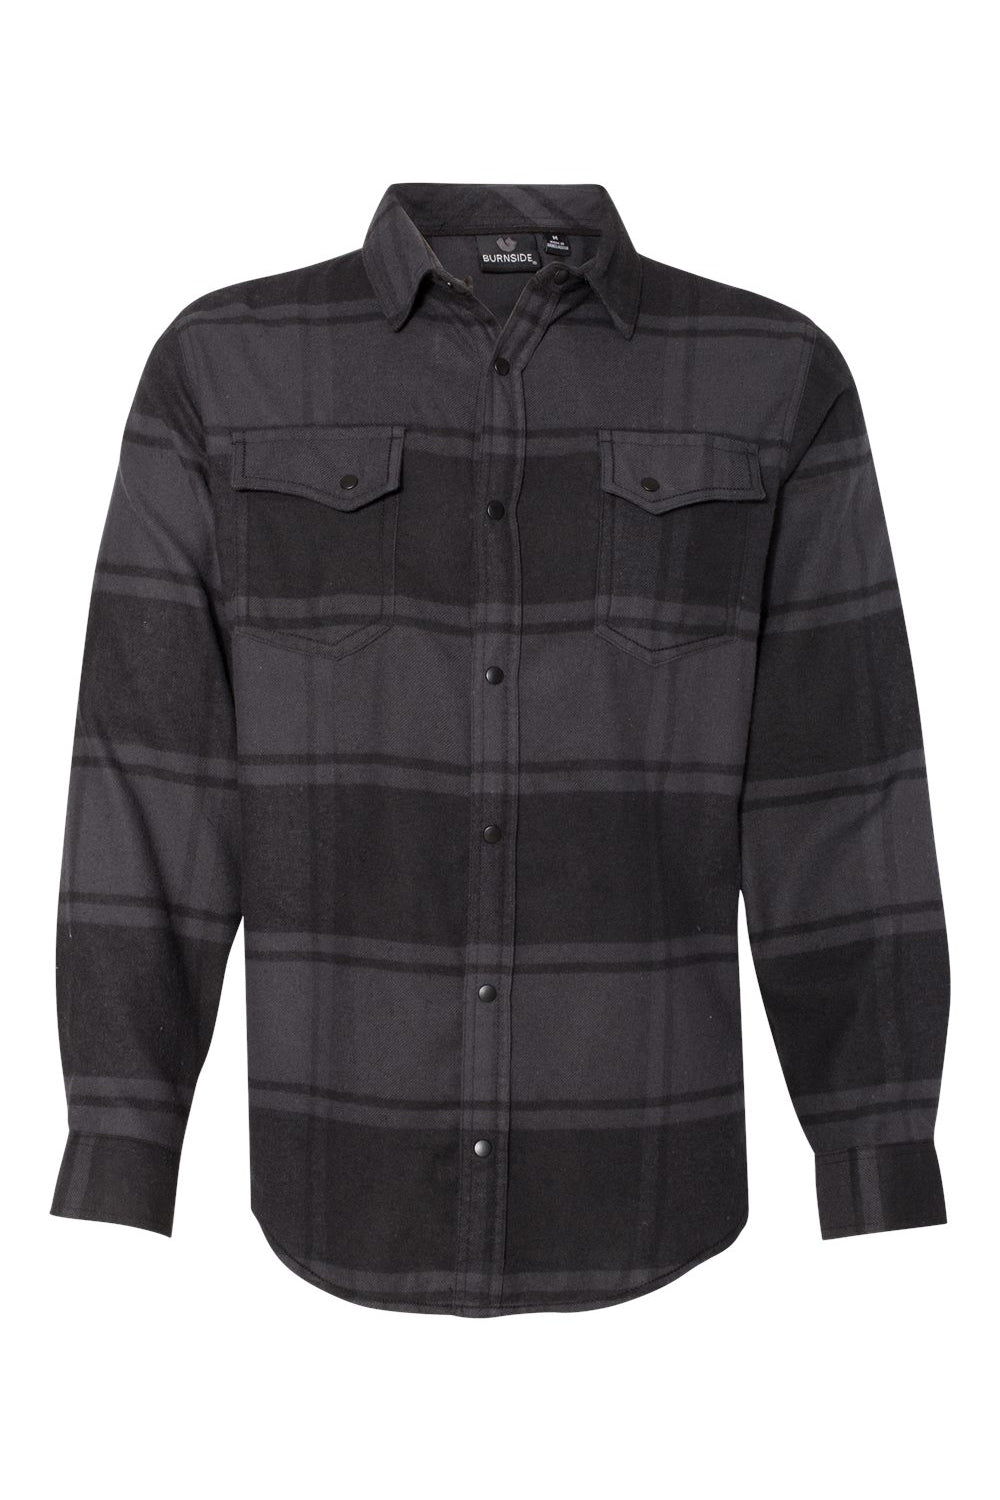 Burnside 8219 Mens Plaid Flannel Long Sleeve Snap Down Shirt w/ Double Pockets Black Flat Front